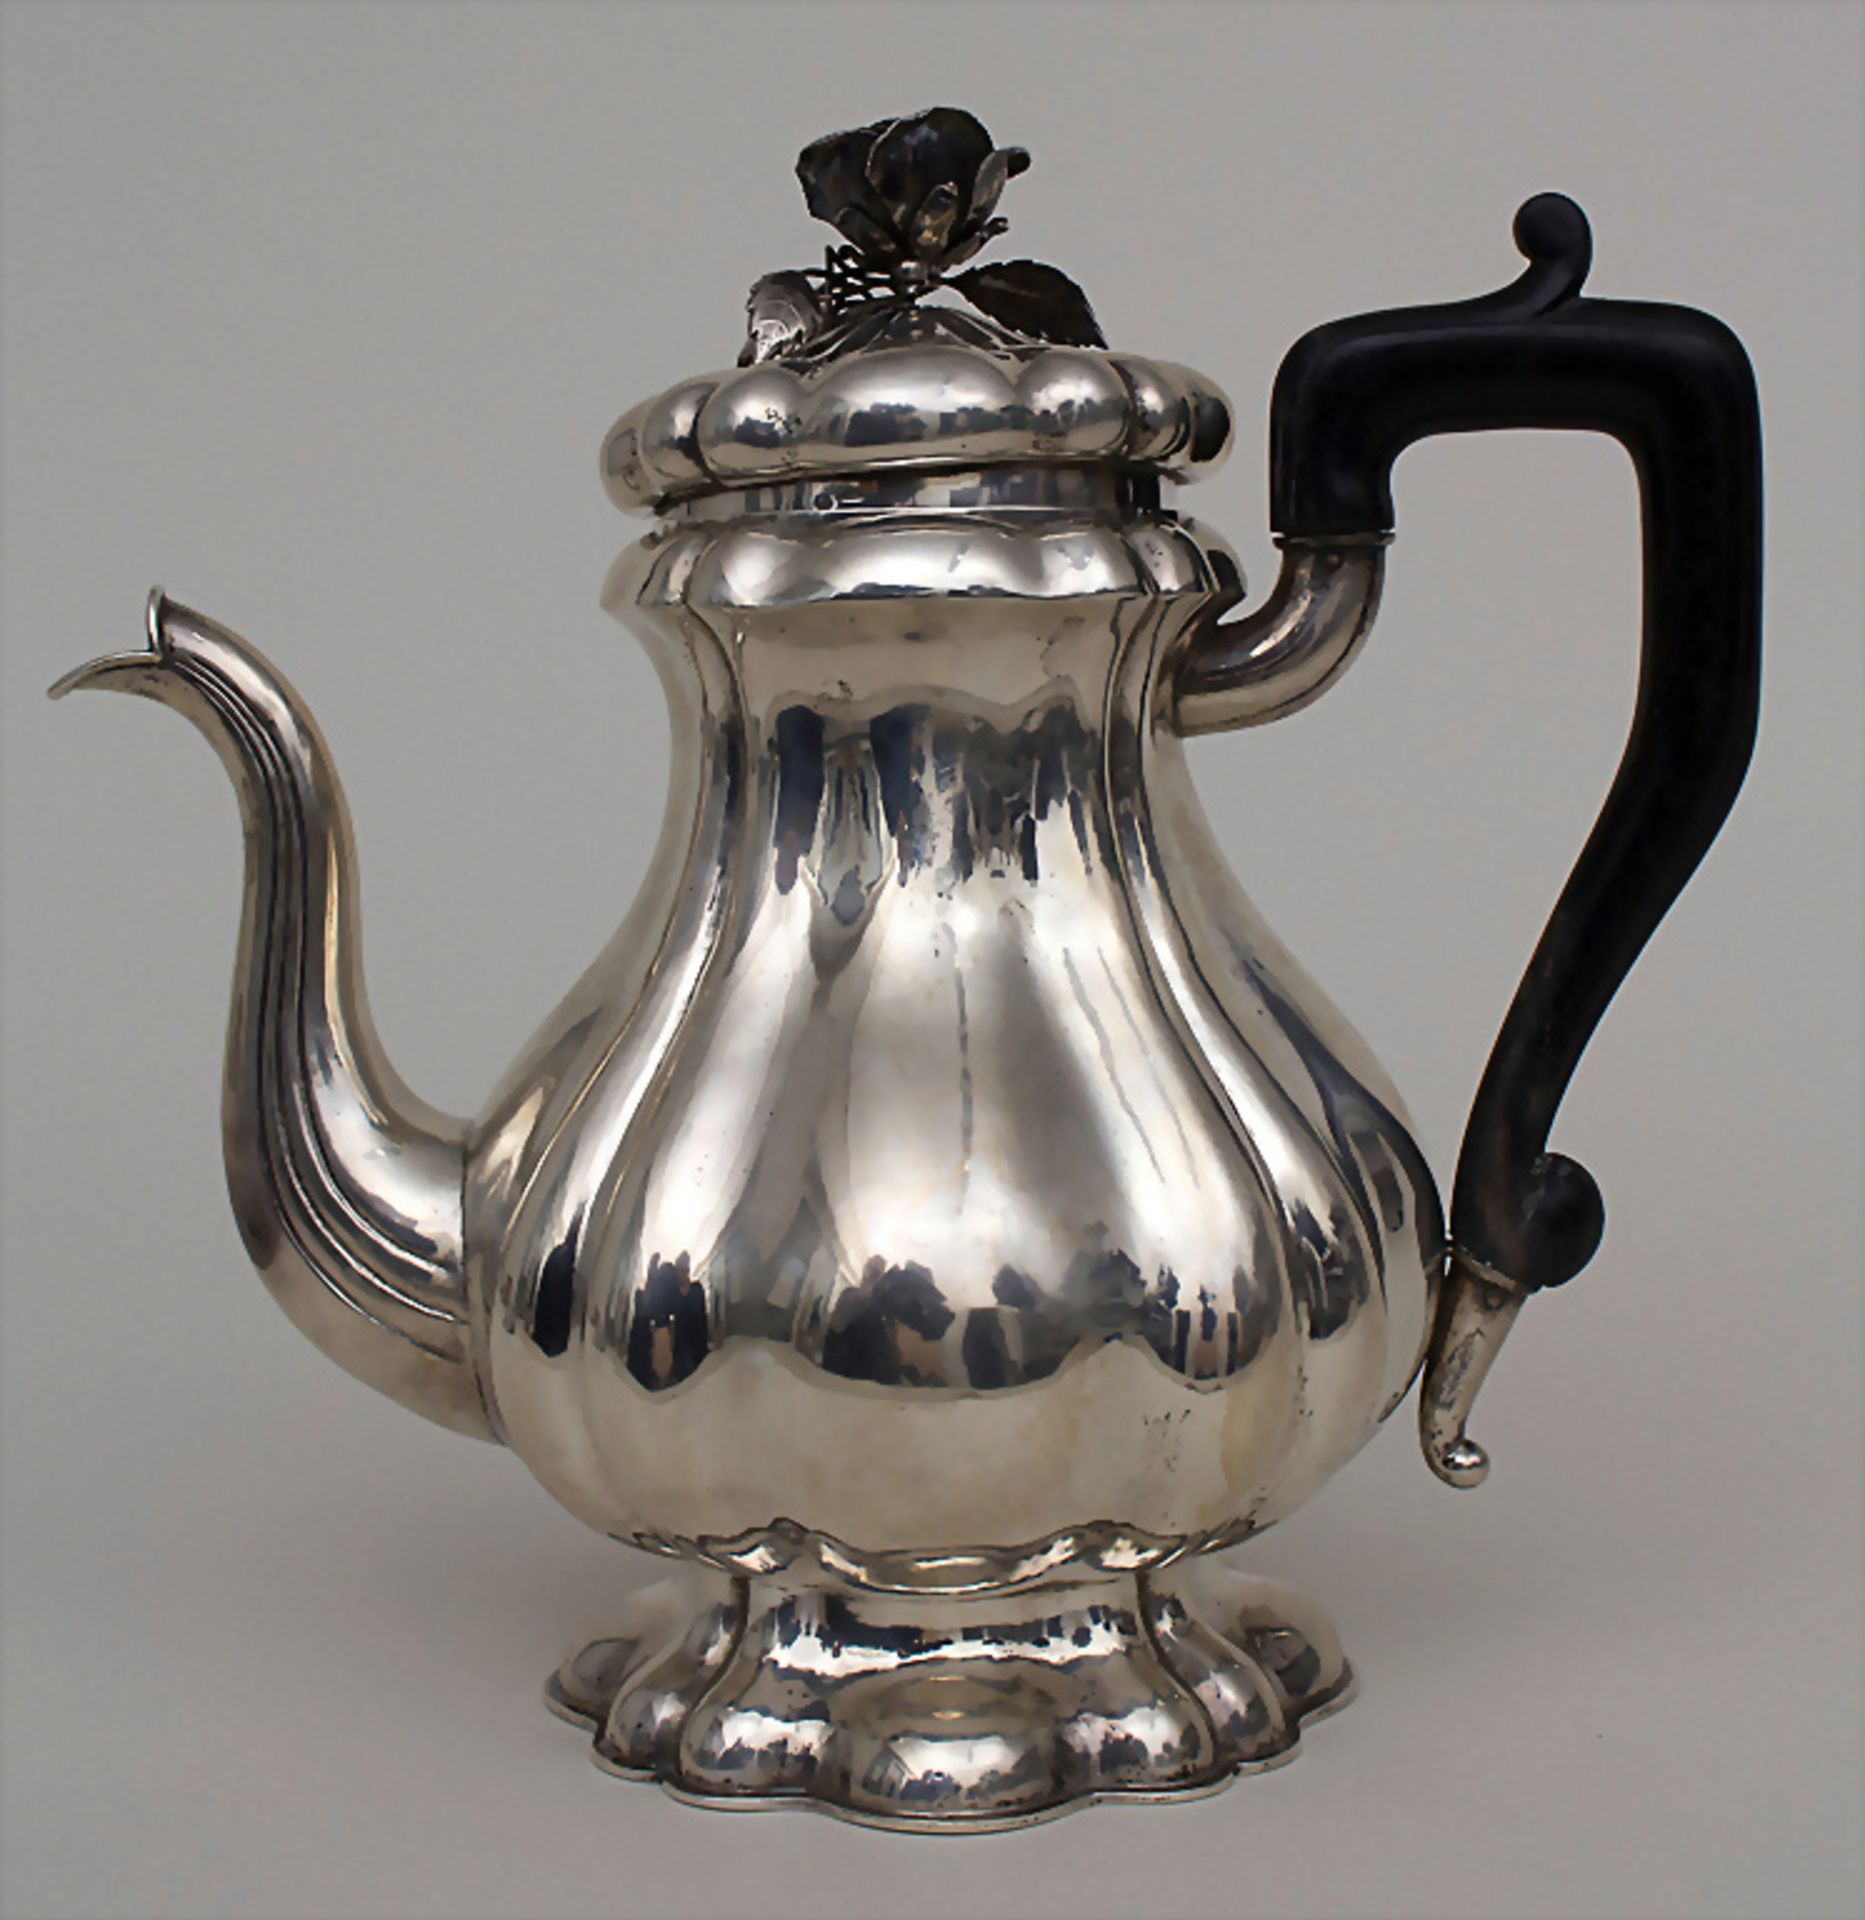 Barock Teekanne / A Baroque teapot, Wien / Vienna, um 1870